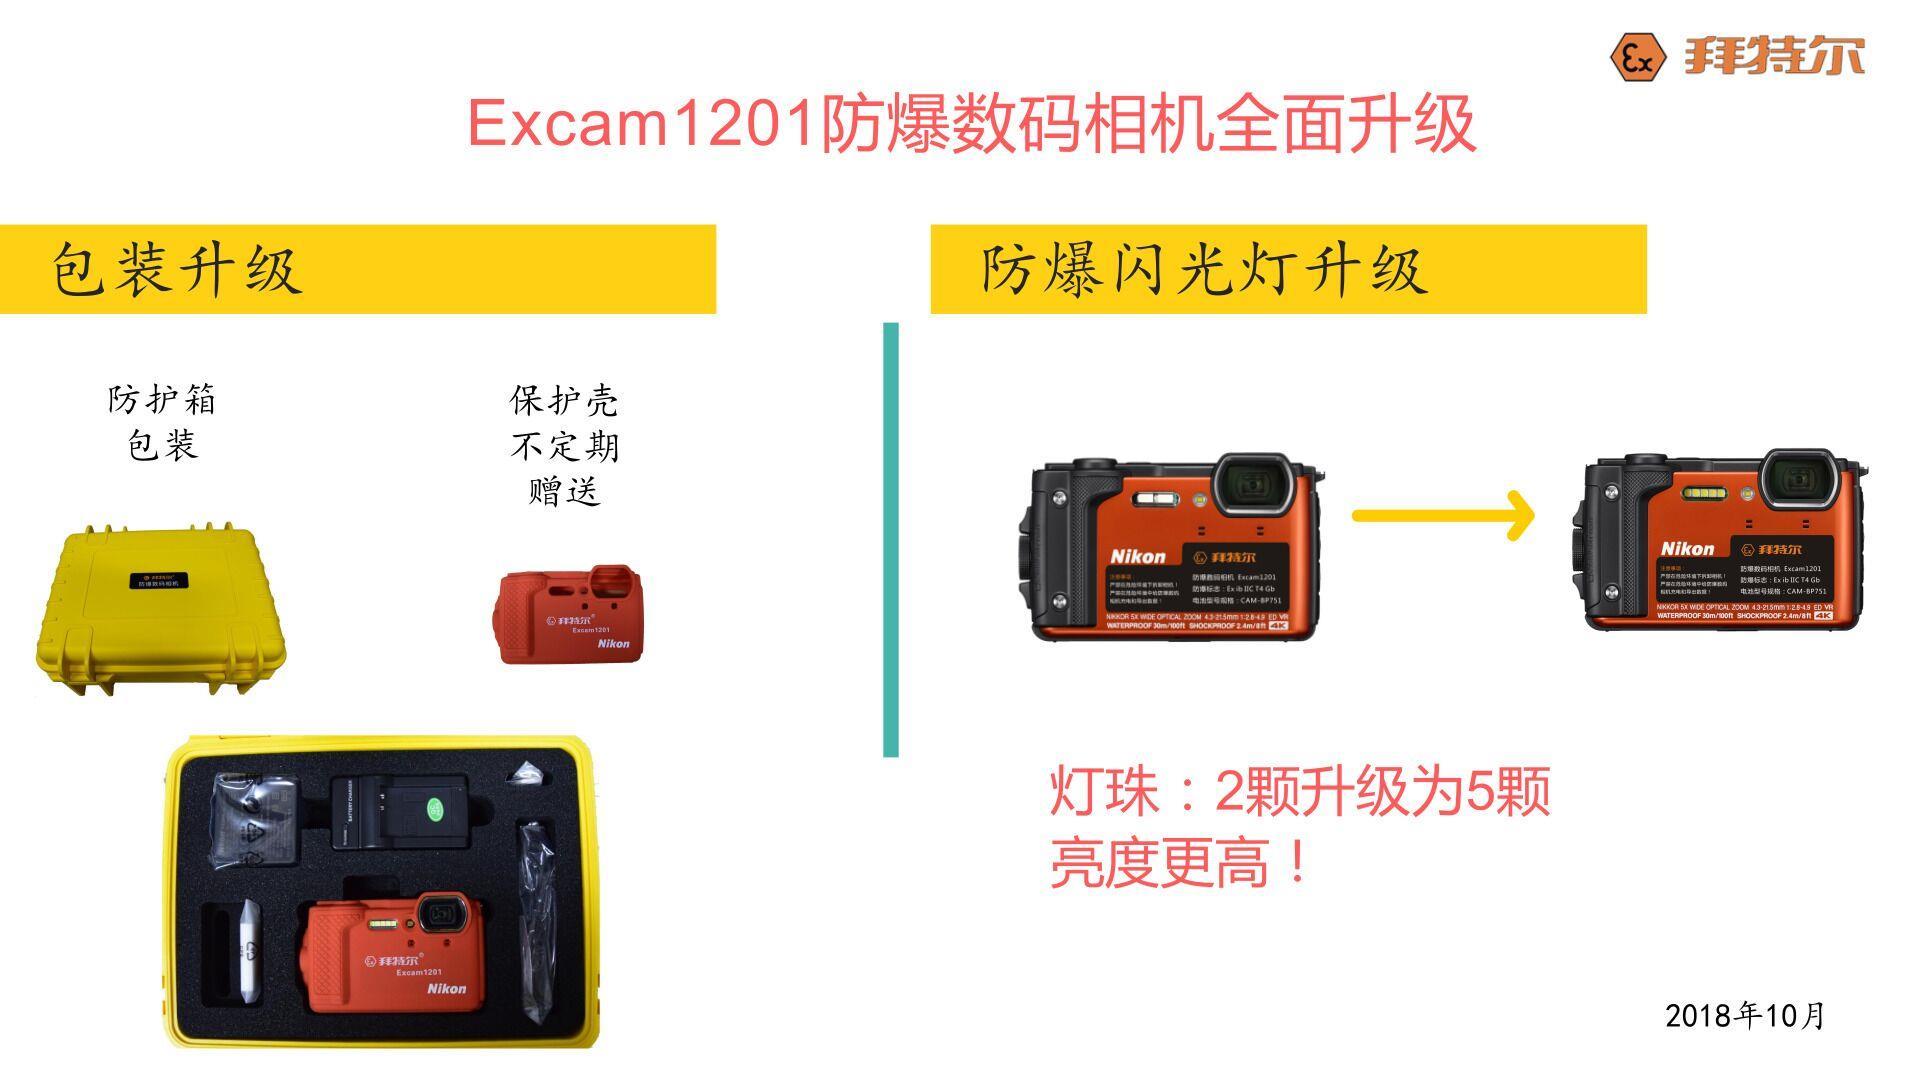 Excam1201防爆数码相机厂商